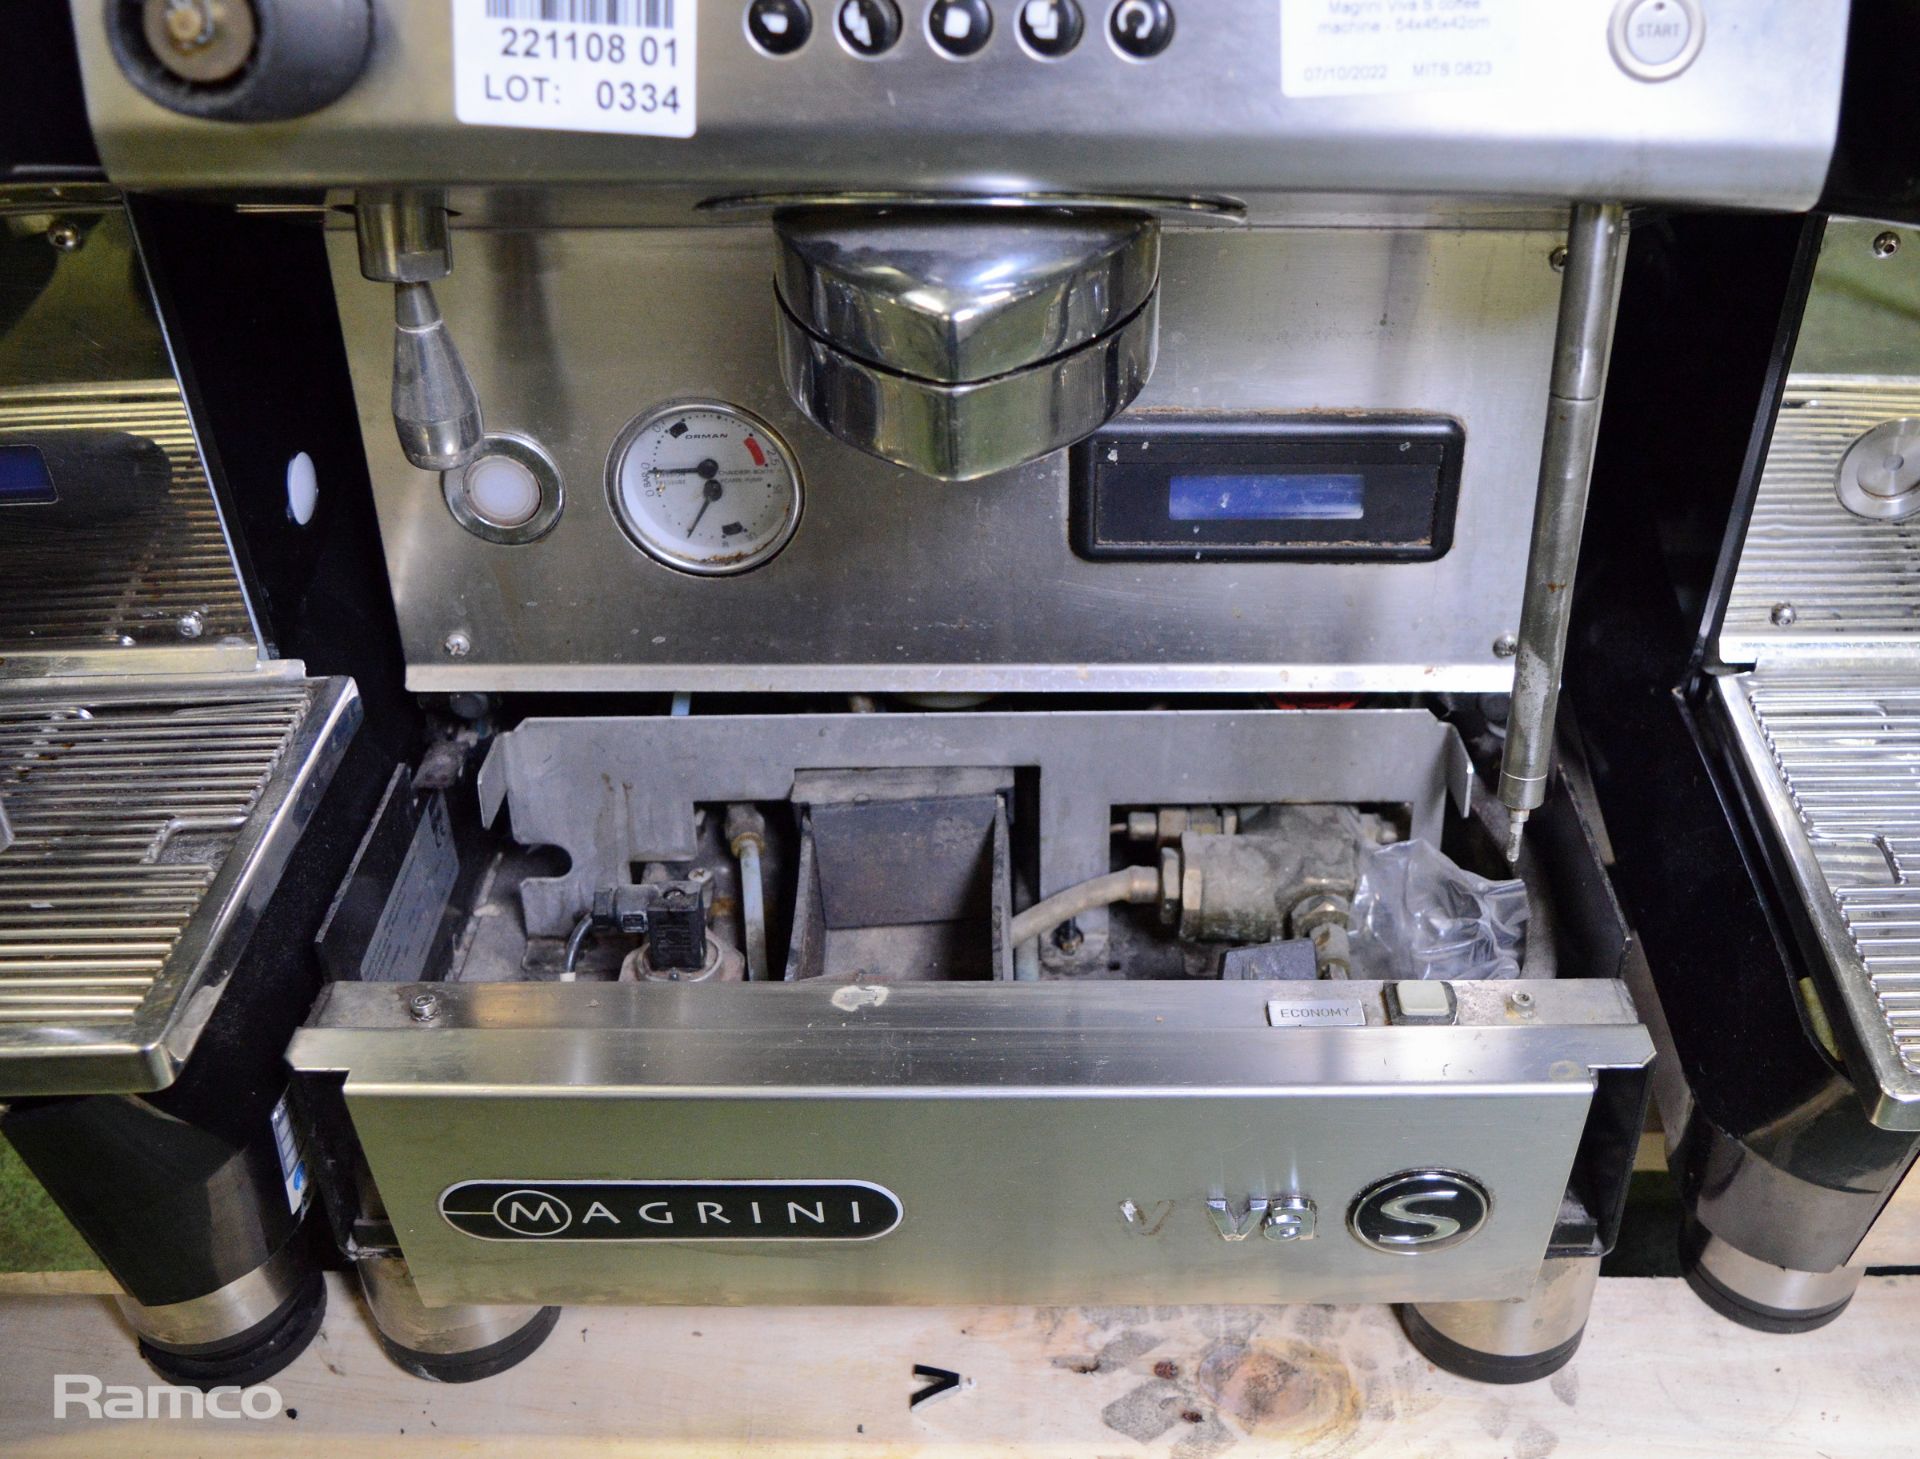 Magrini Viva S coffee machine - 54x45x42cm - Image 2 of 4